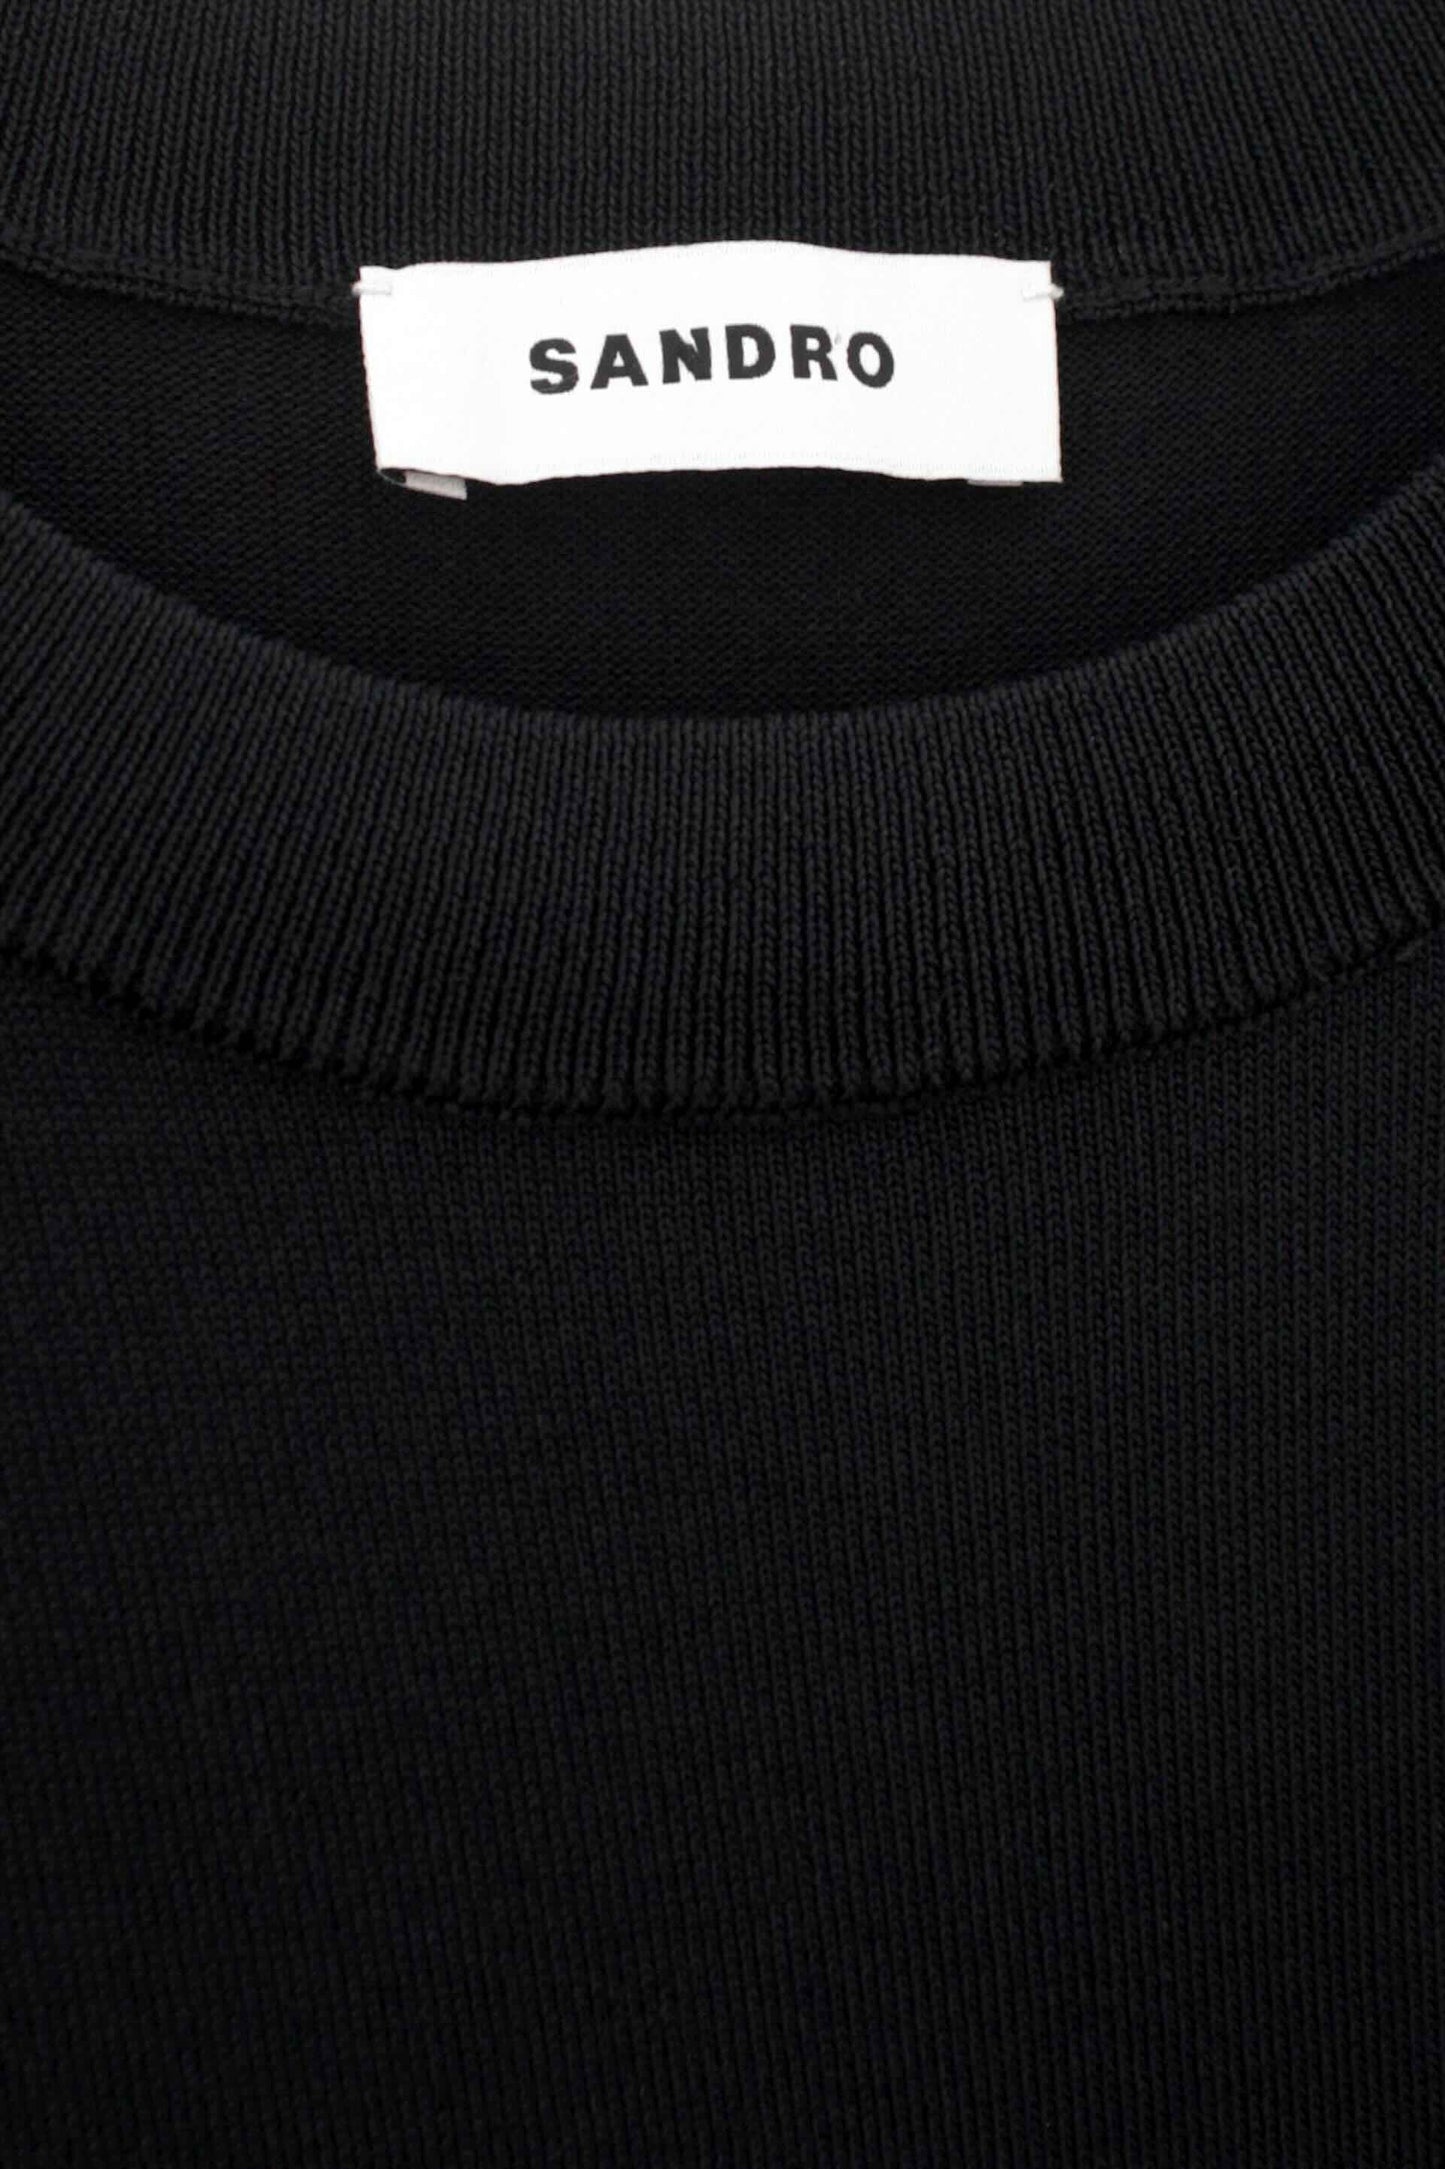 Sandro Paris Knitted T-Shirt